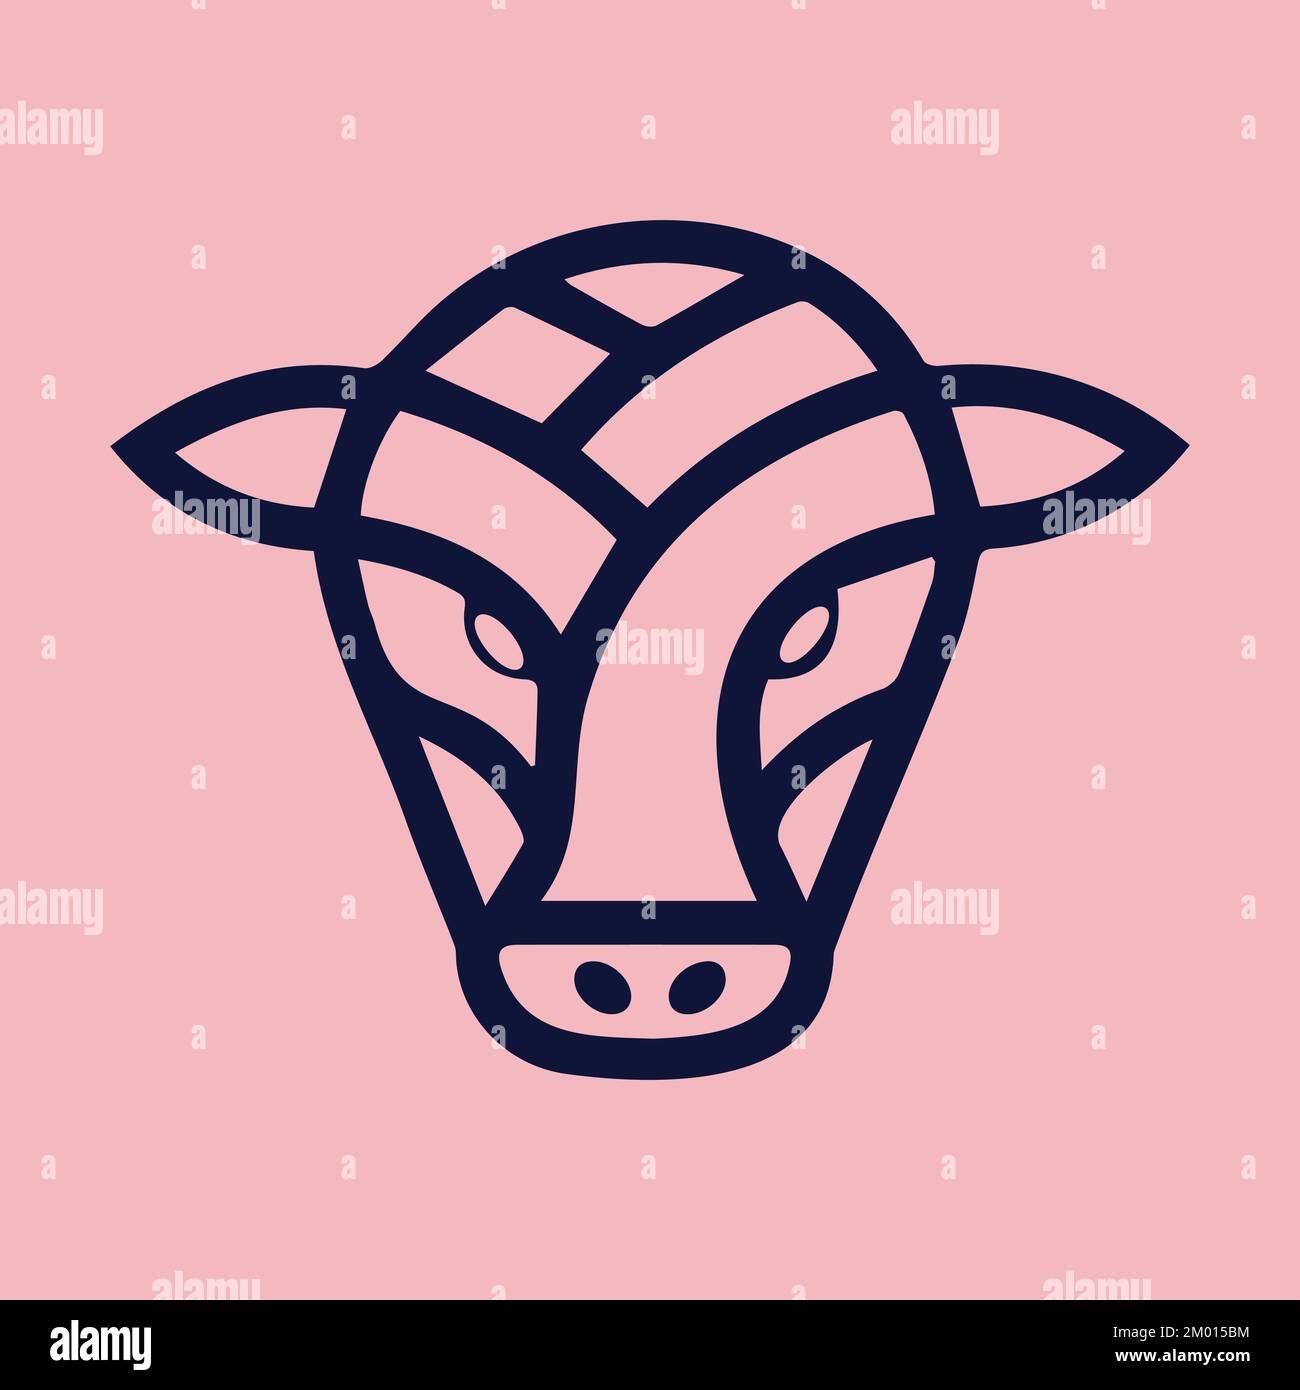 Silhouette animal head logo icon design Stock Vector